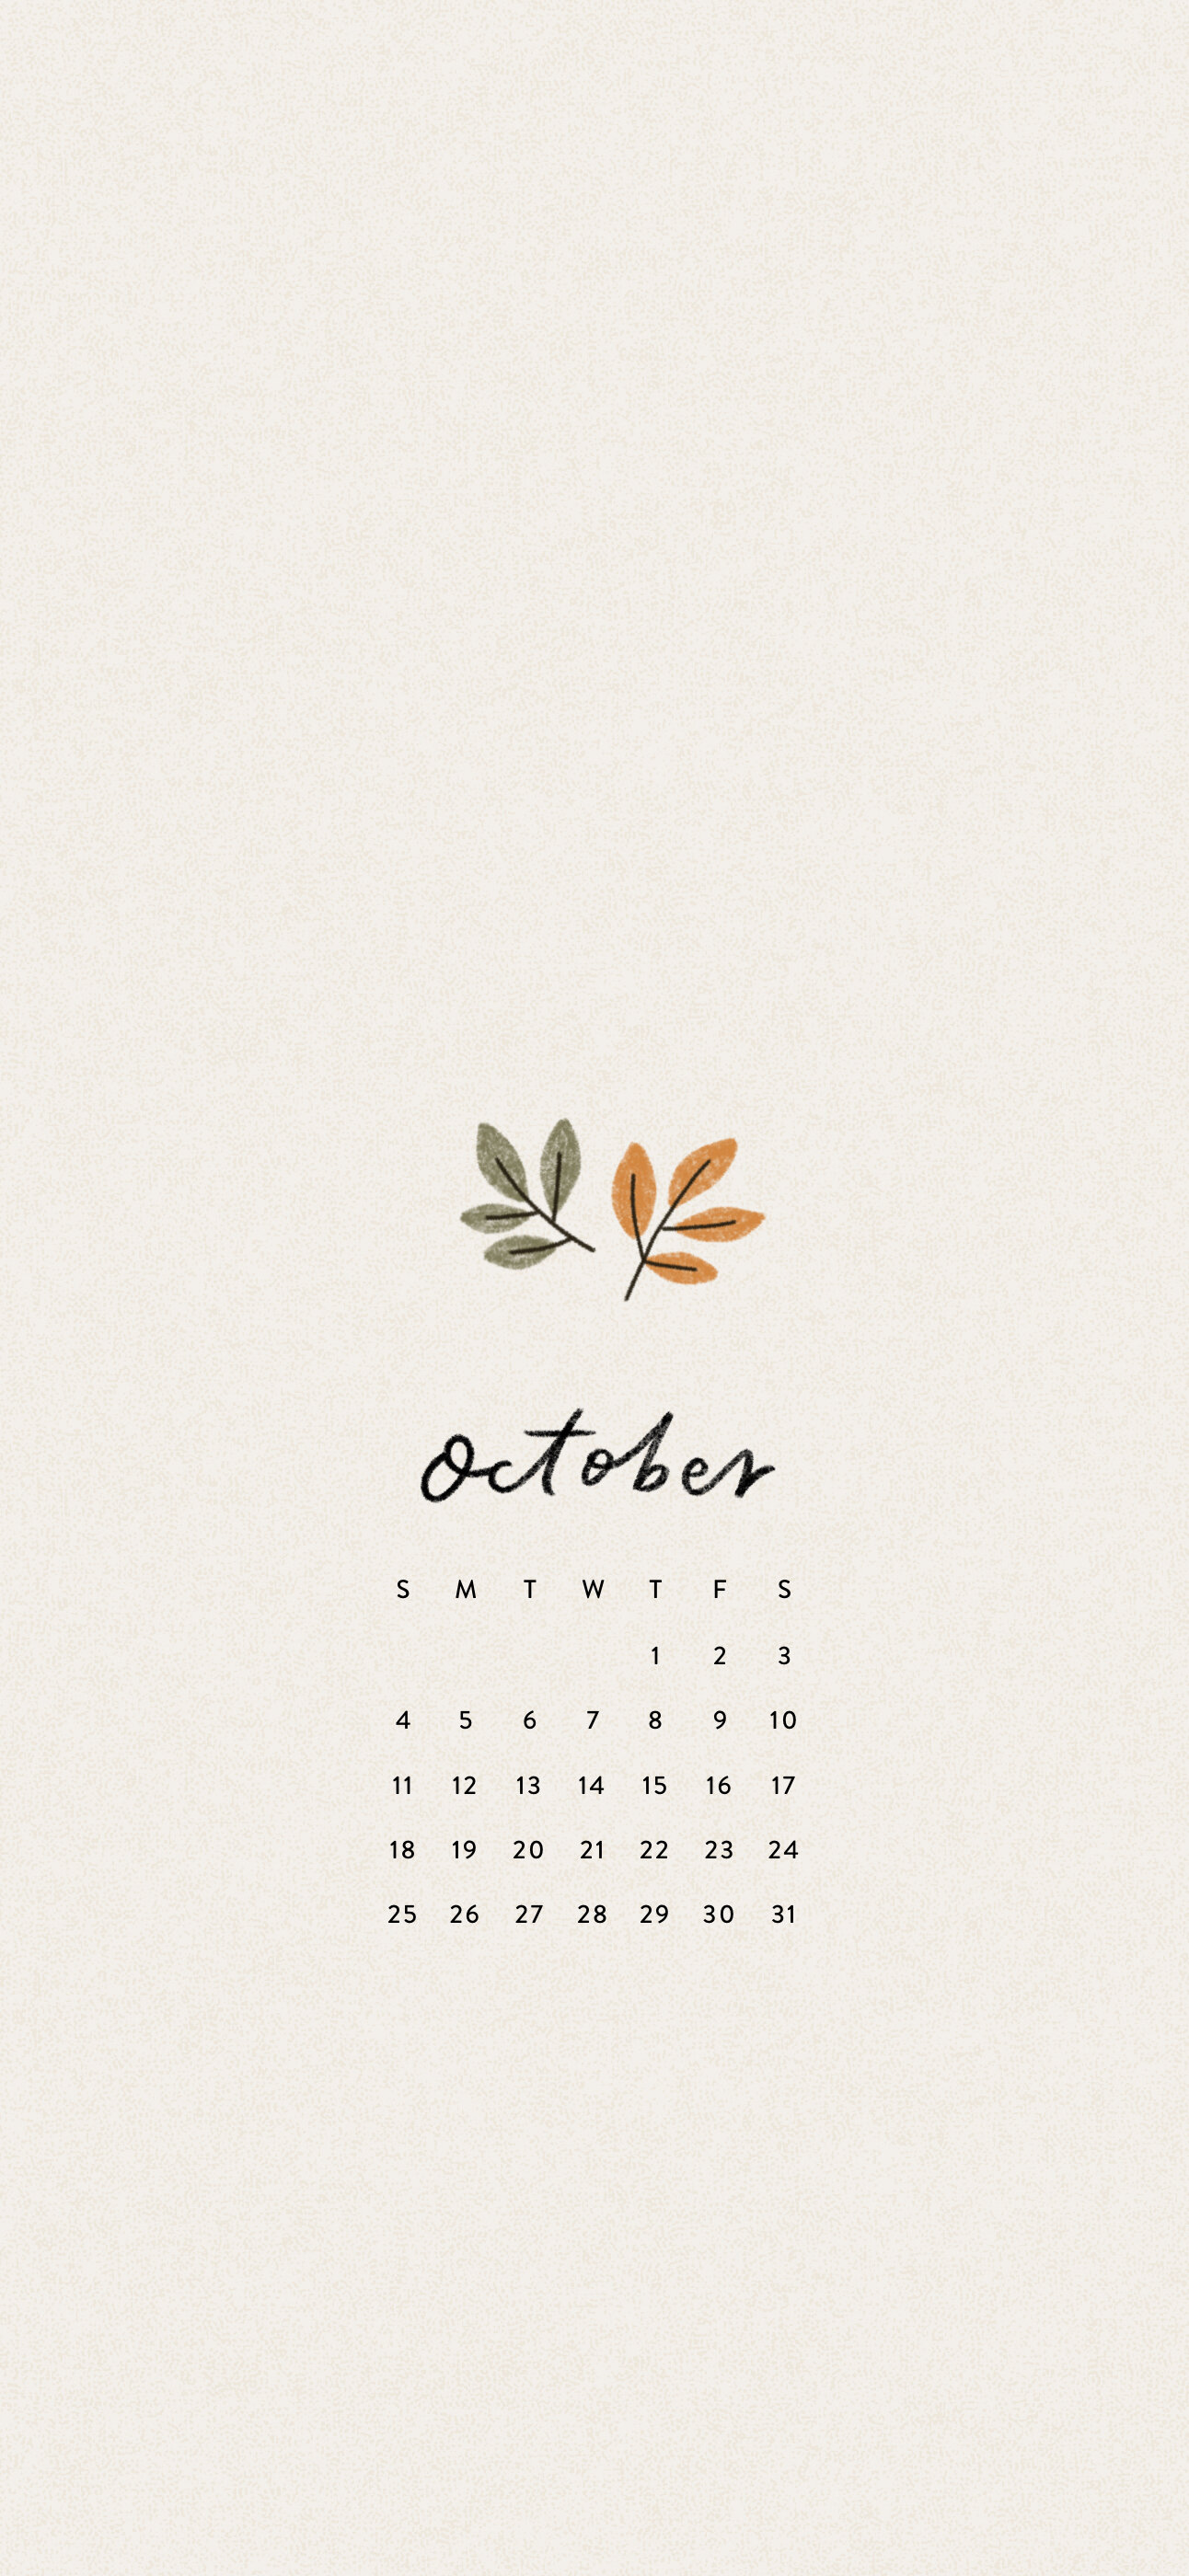 October Calendar Phone Wallpapers! — Love, Minna